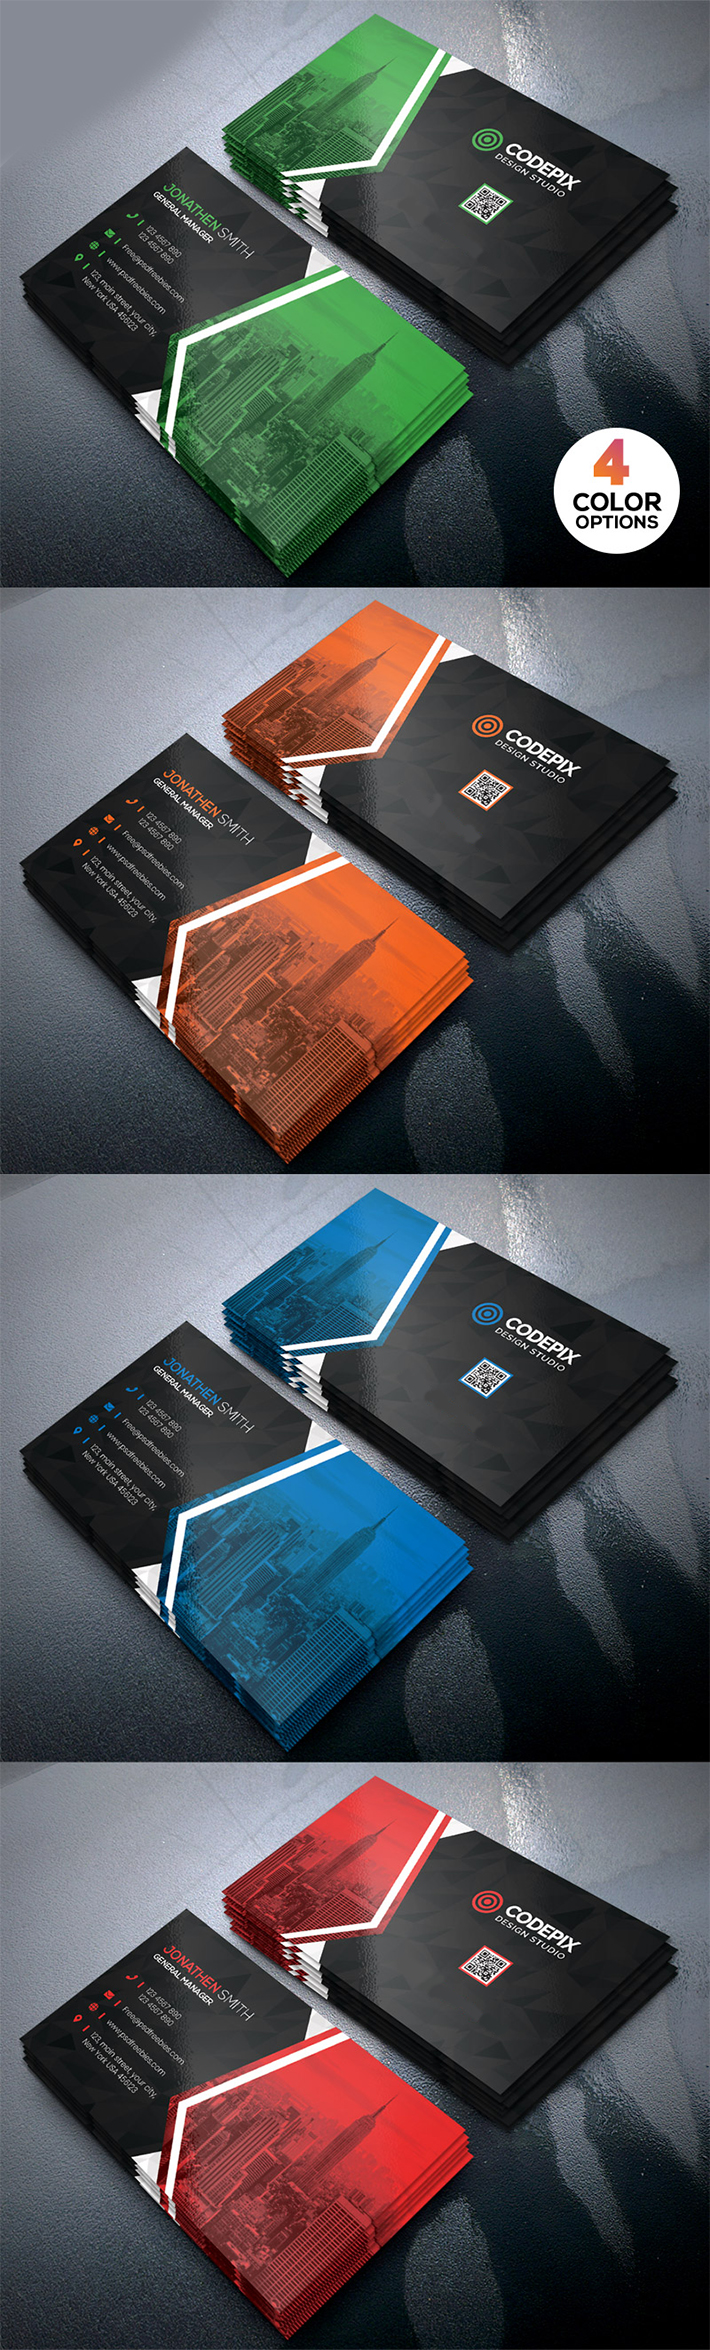 Free Download Elegant Business Cards PSD Template Design (4 Color Options)